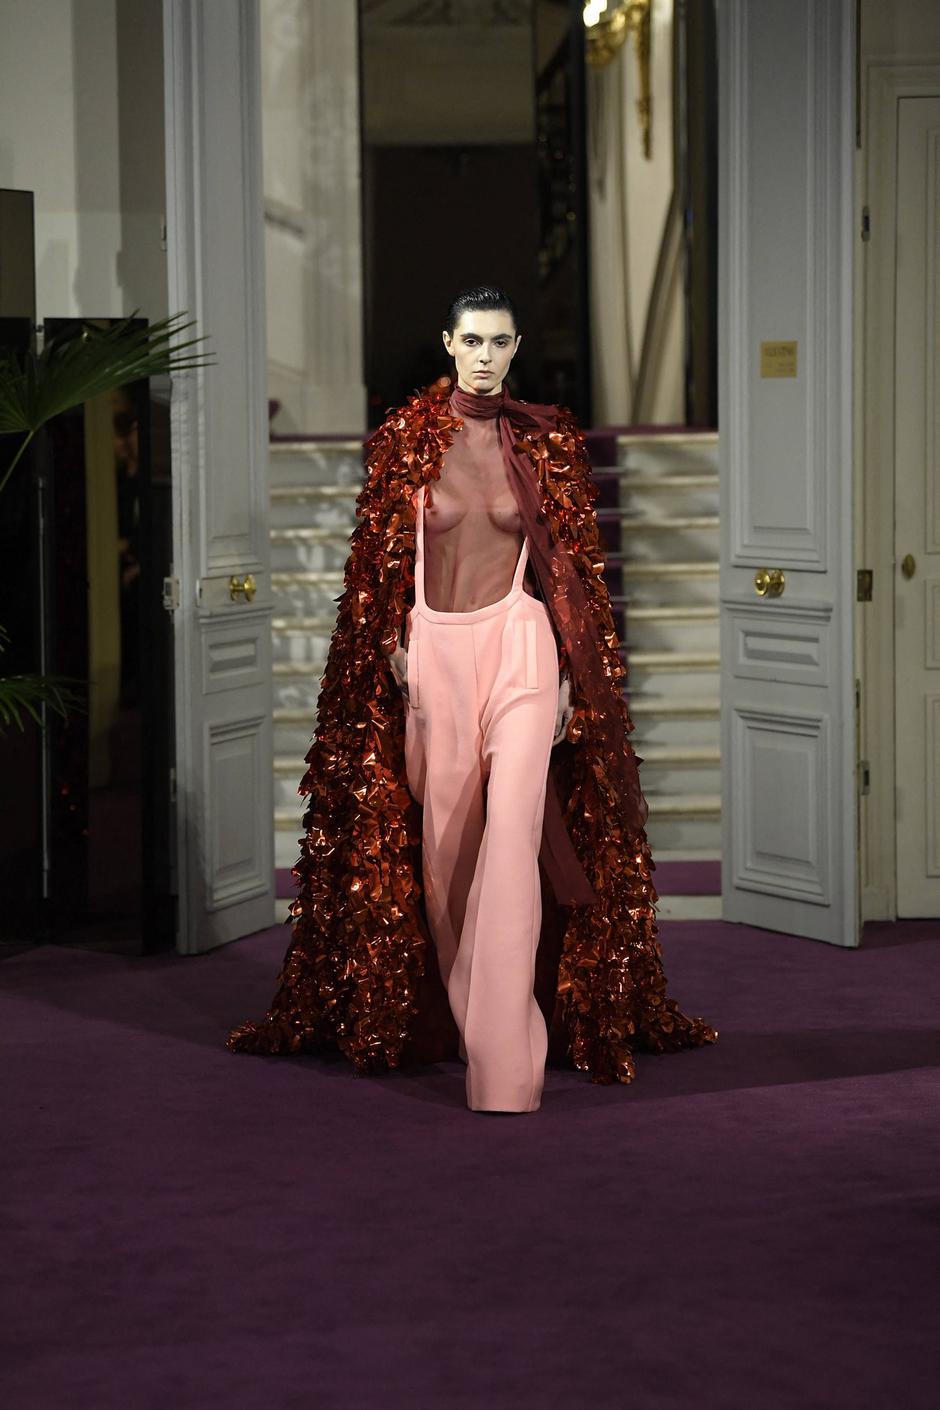 Tjedan visoke mode u Parizu | Autor: Profimedia